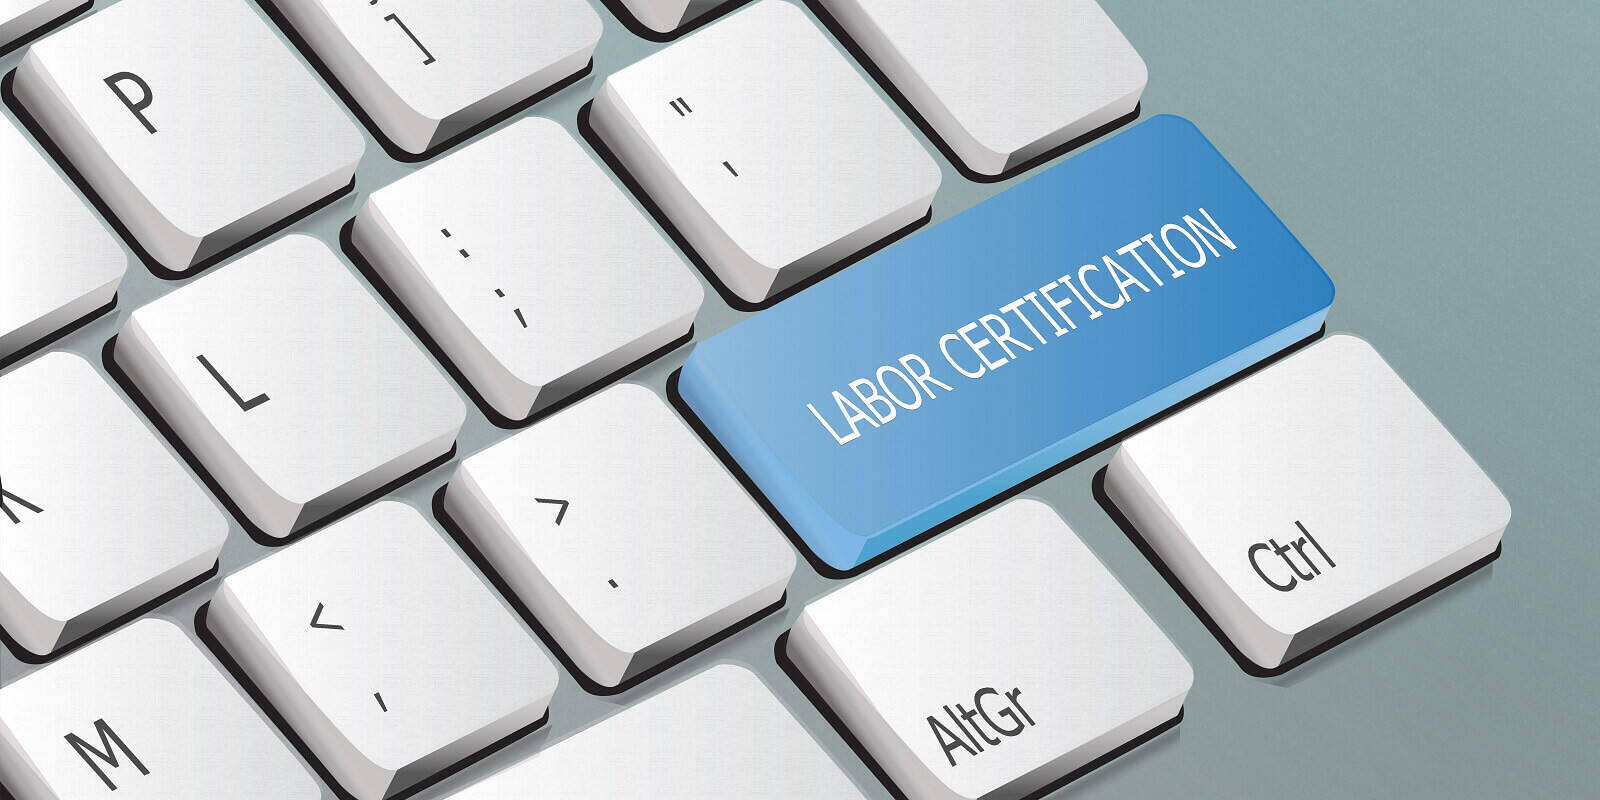 labor certification written on the keyboard button